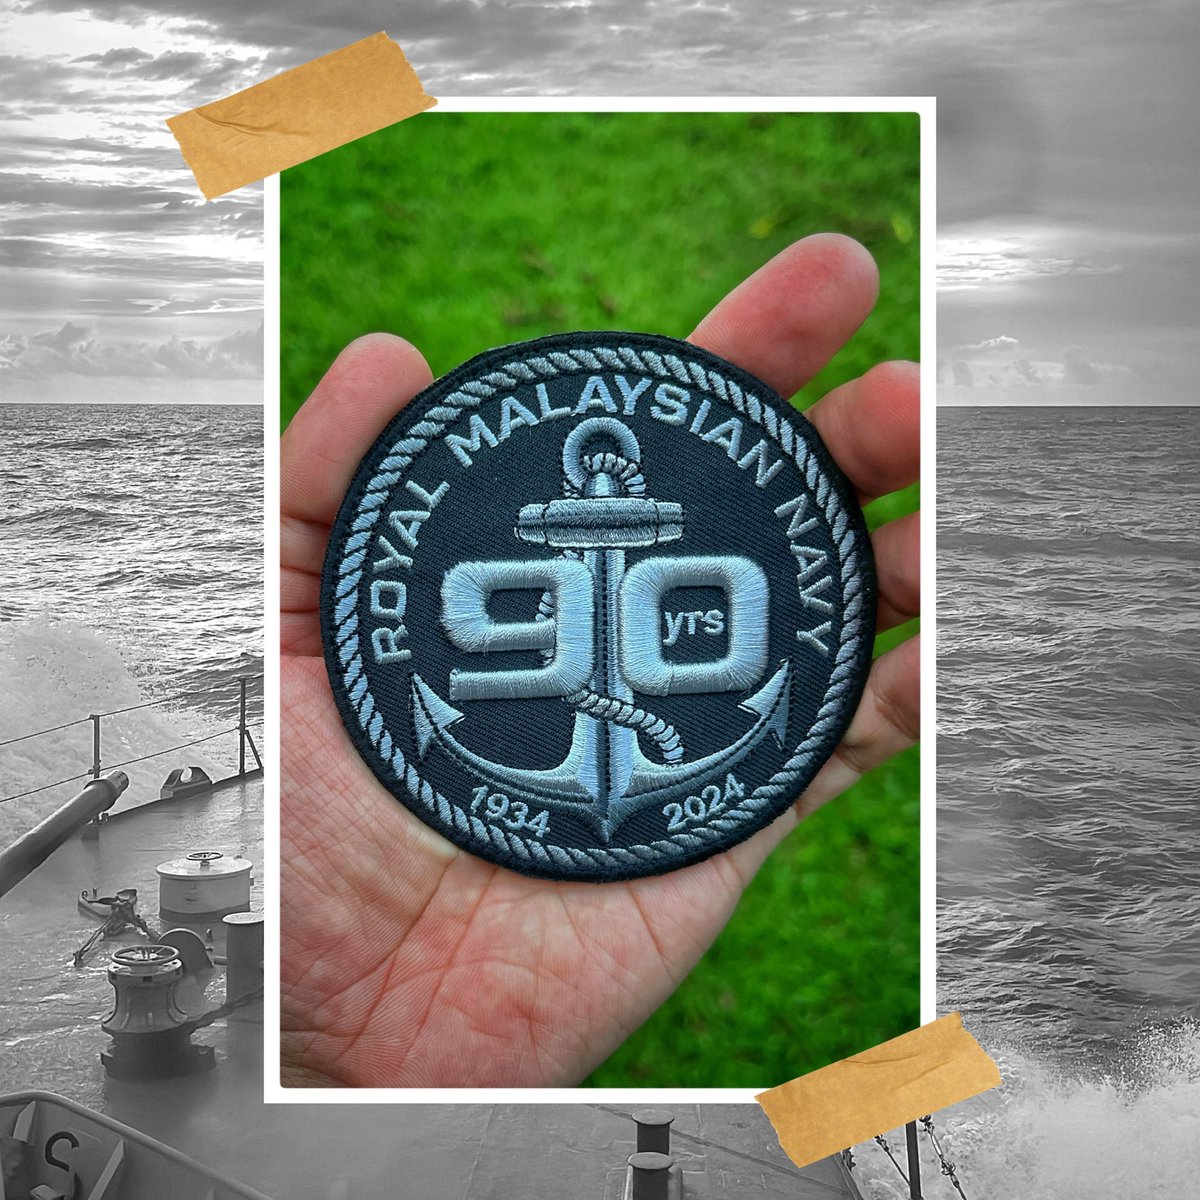 We exist because of the fleet! ⚓️ Happy Navy Day to all Navy People 🫡 Proud to be Navy 💪🏻
Tiada sambutan tahun ni buat pertama kalinya sepanjang dalam perkhidmatan. 

#navypeople #sediaberkorban #TLDM90 #TLDMPerkasaKedaulatanTerpelihara